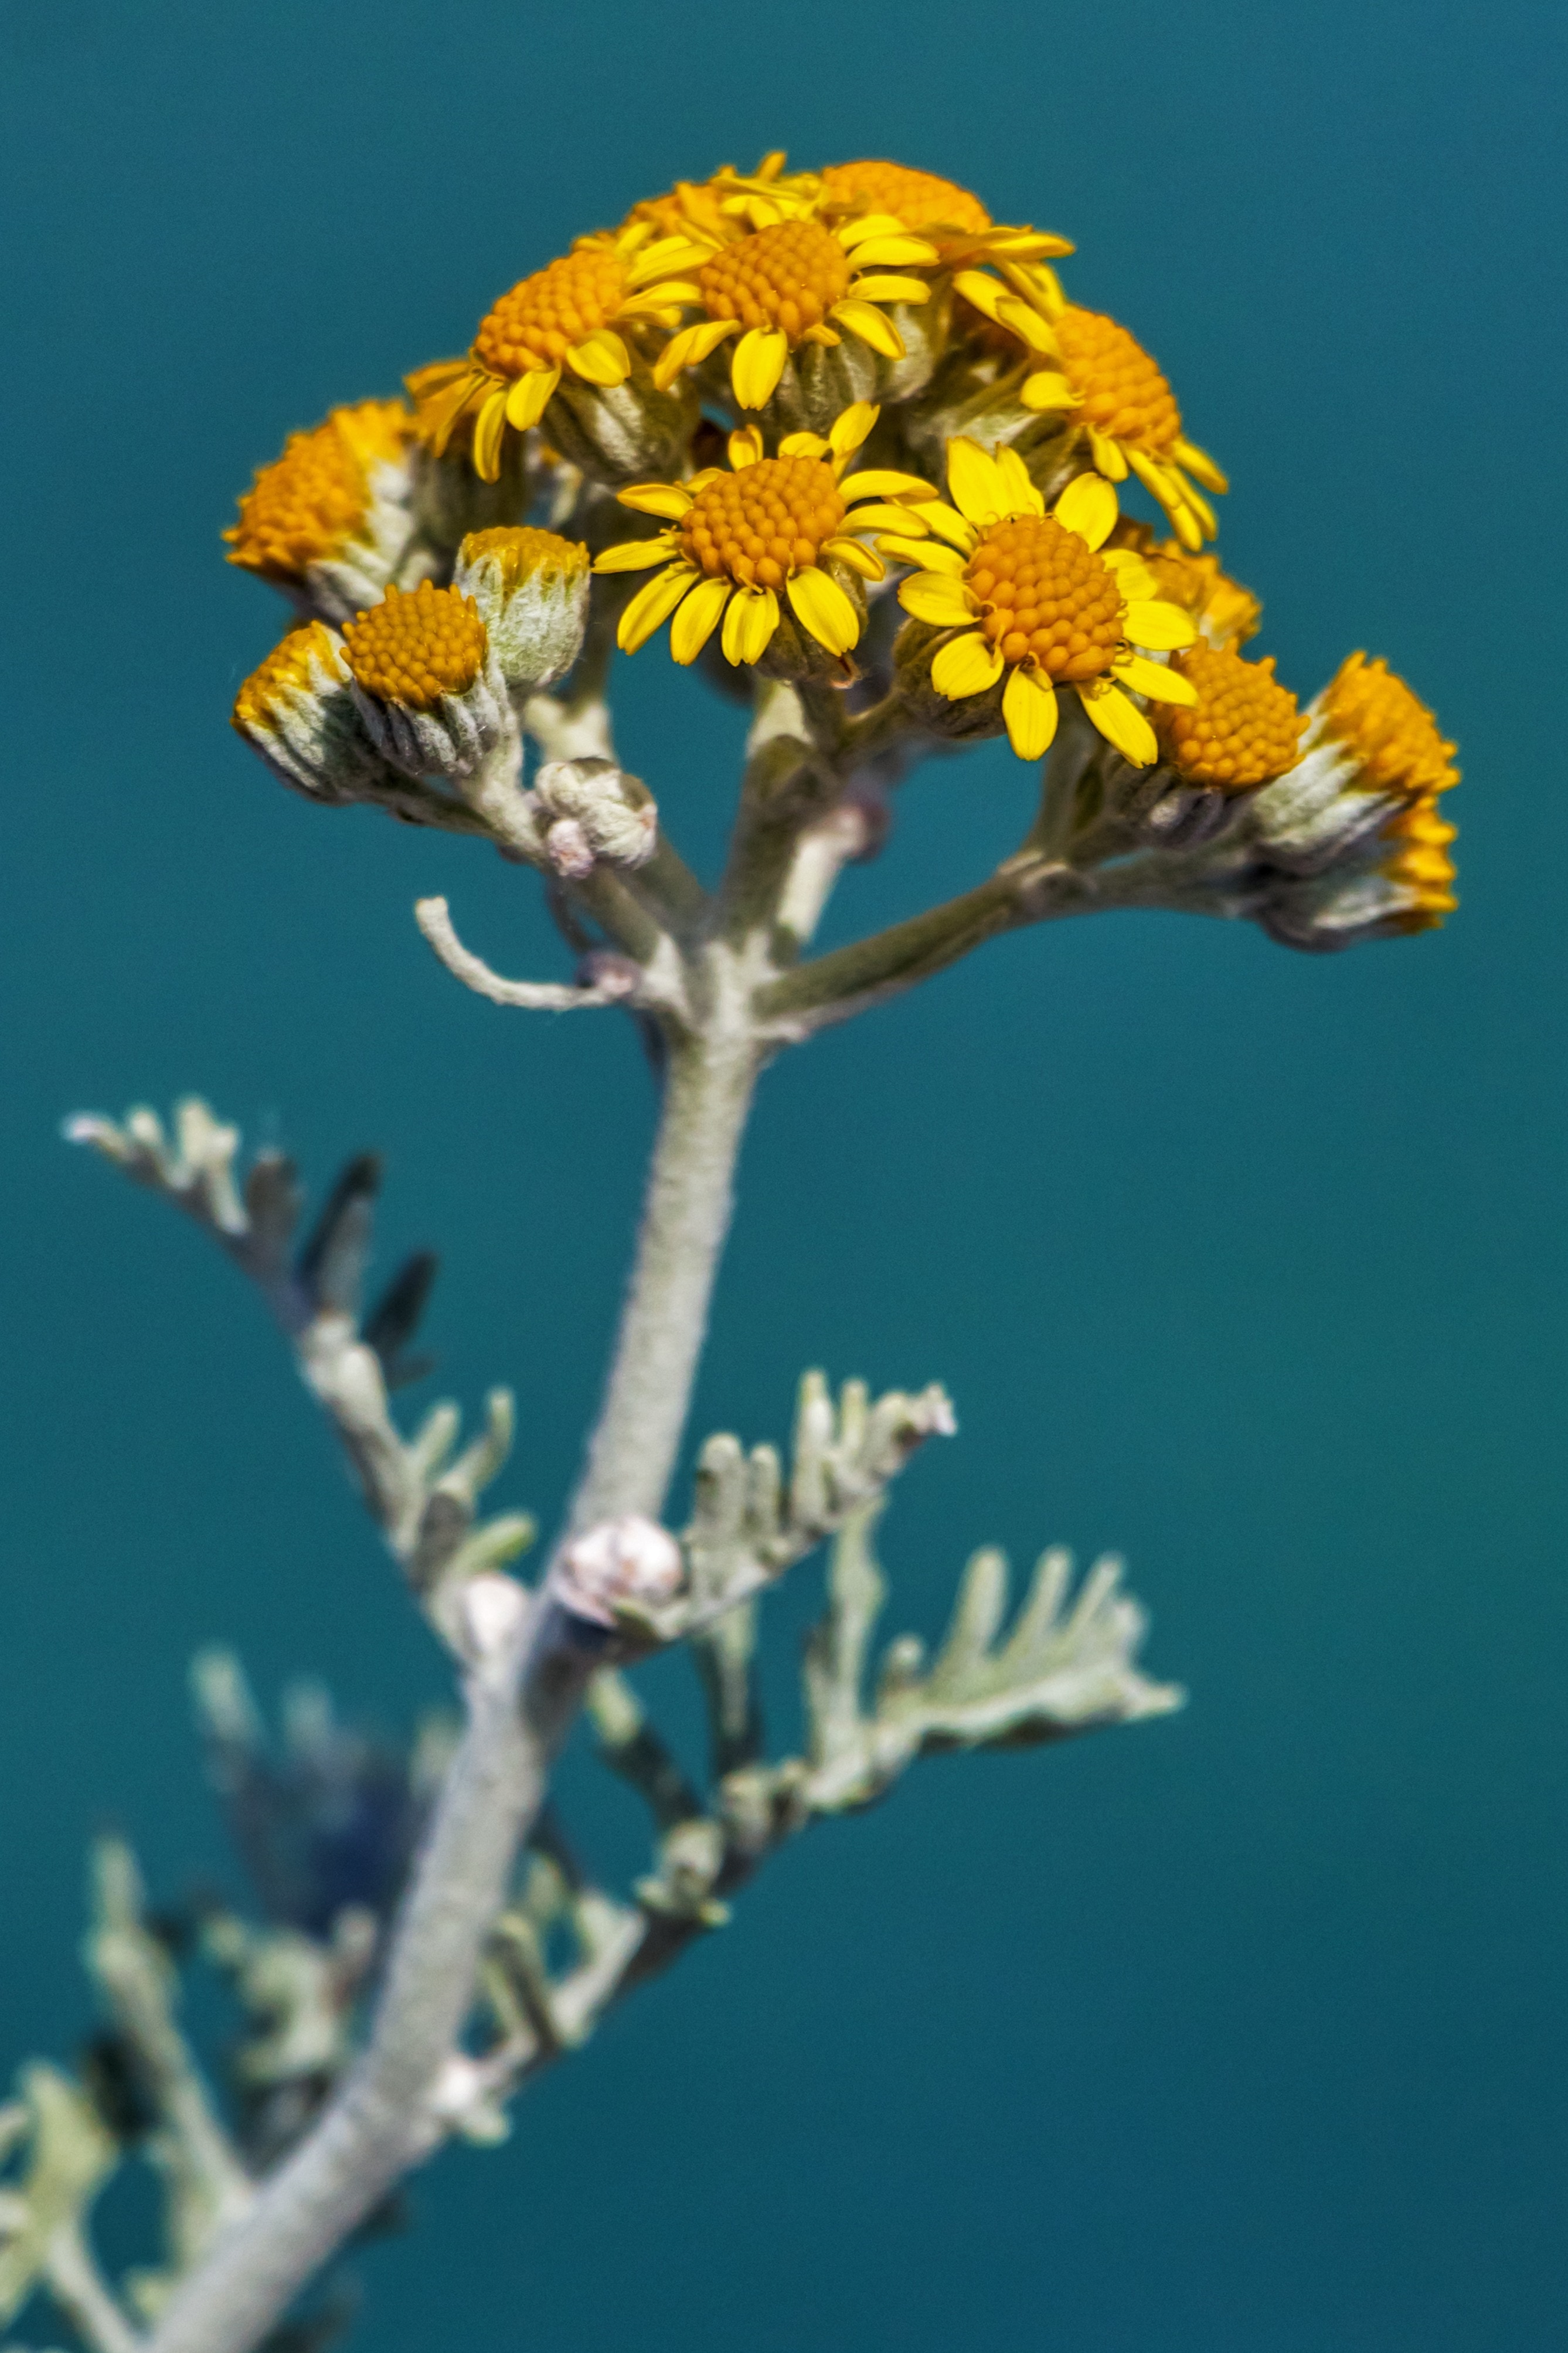 yellow petaled flower in closeup shot